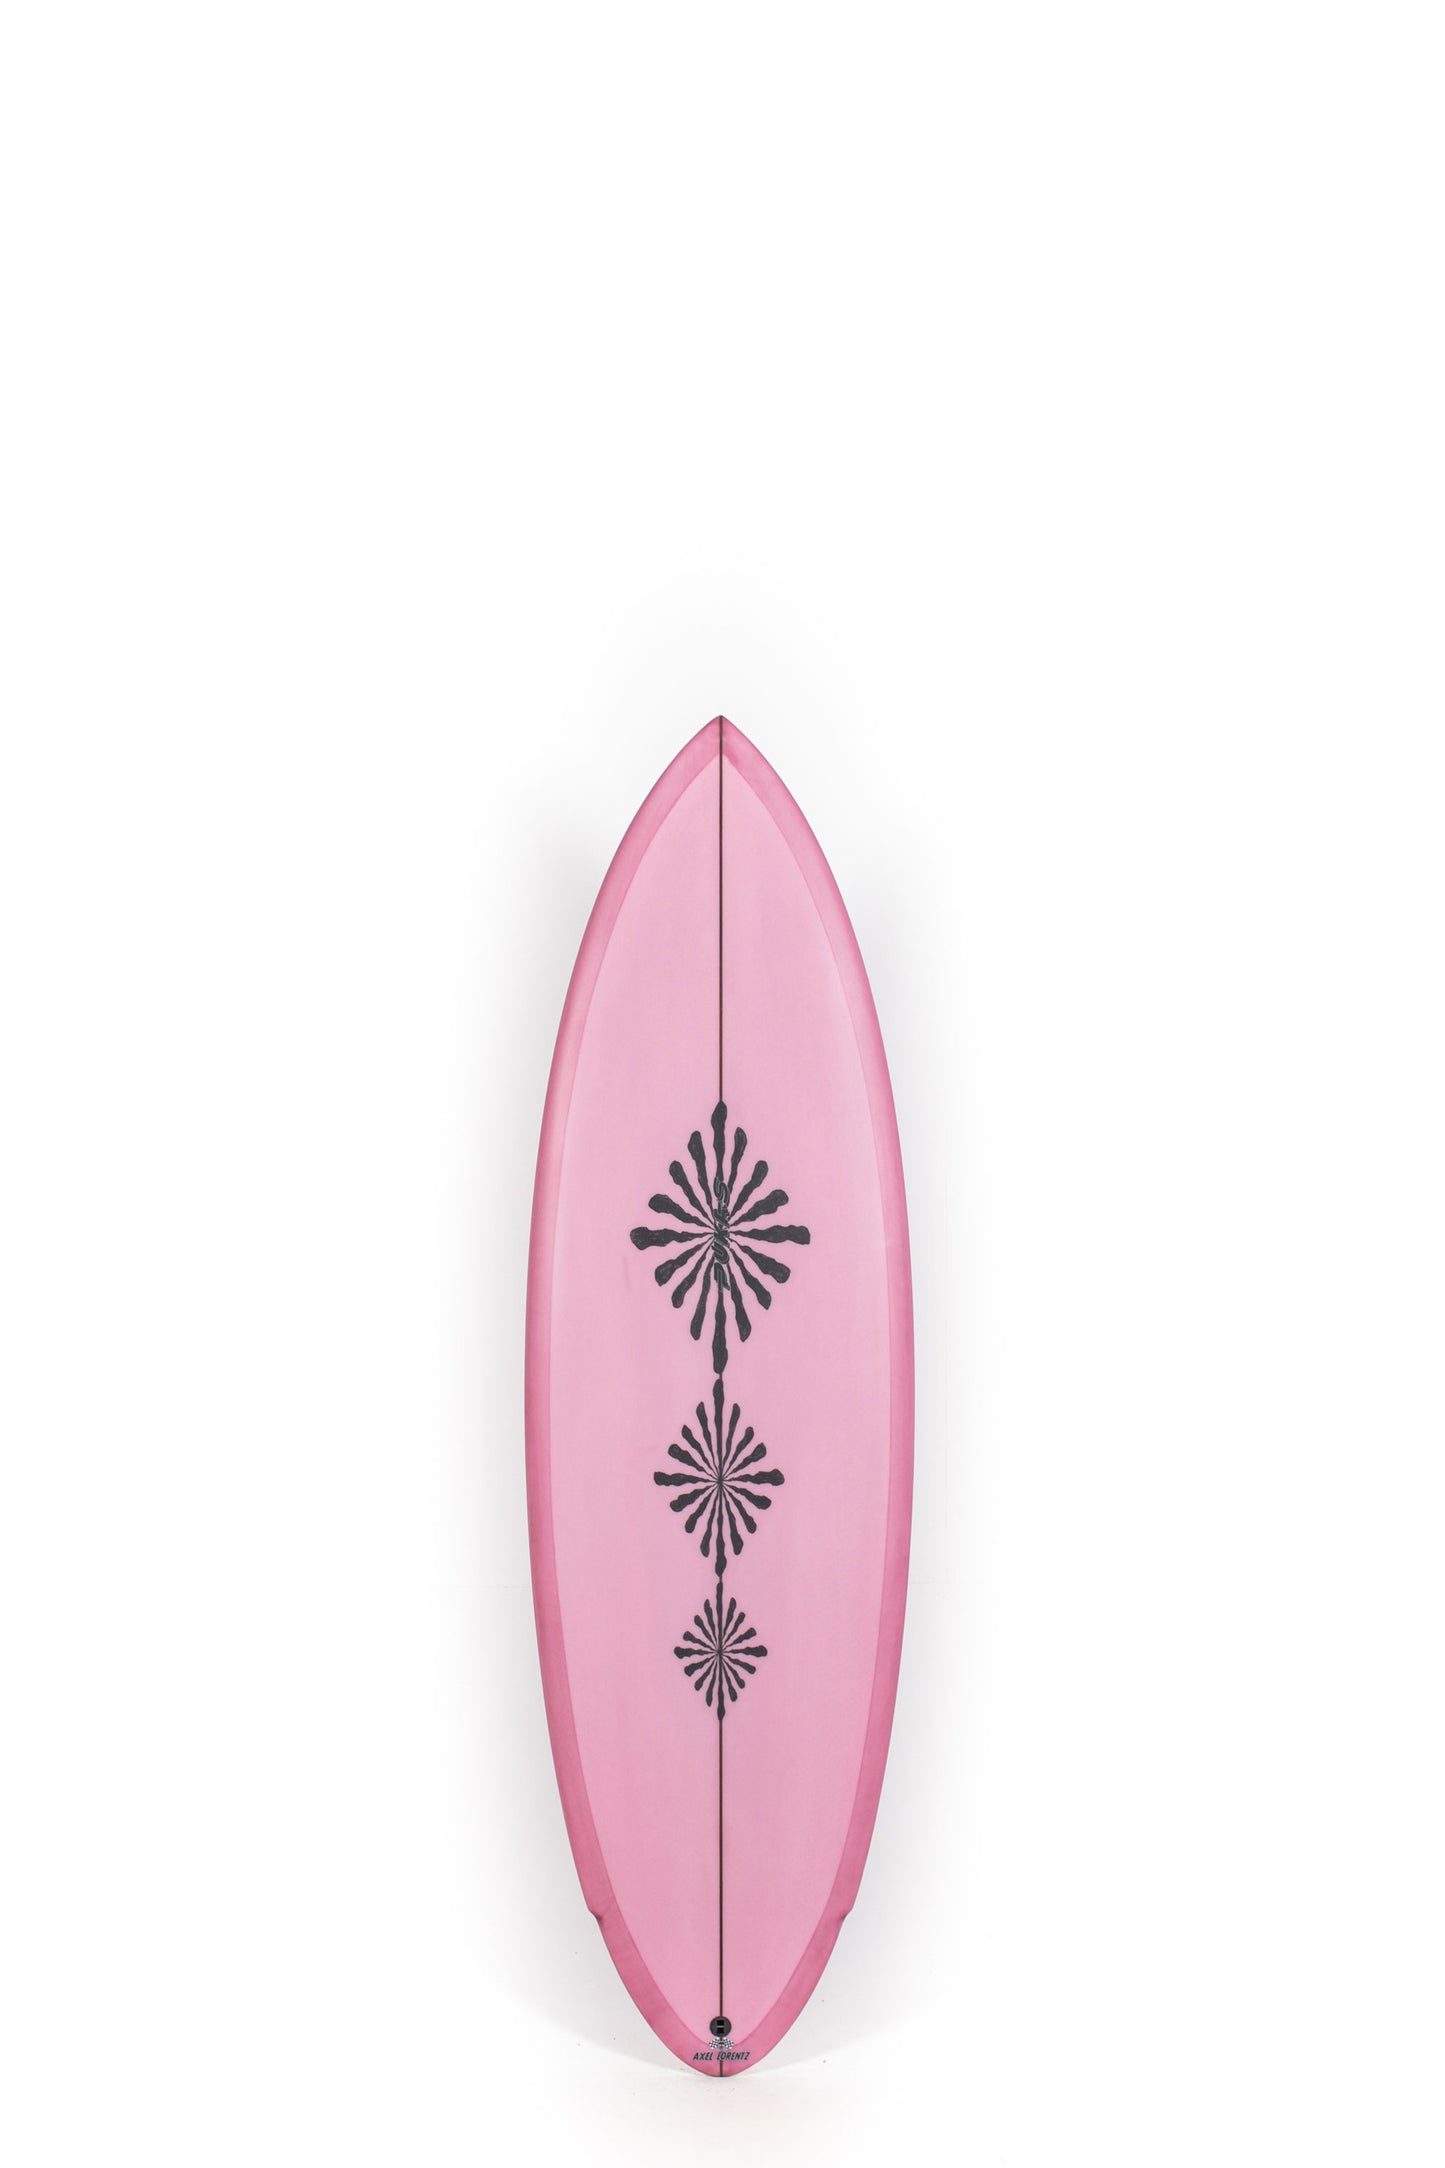 Pukas Surf Shop - Pukas Surfboards - ACID PLAN by Axel Lorentz - 5'9" x 20 x 2,44 x 30,77L - AX09196